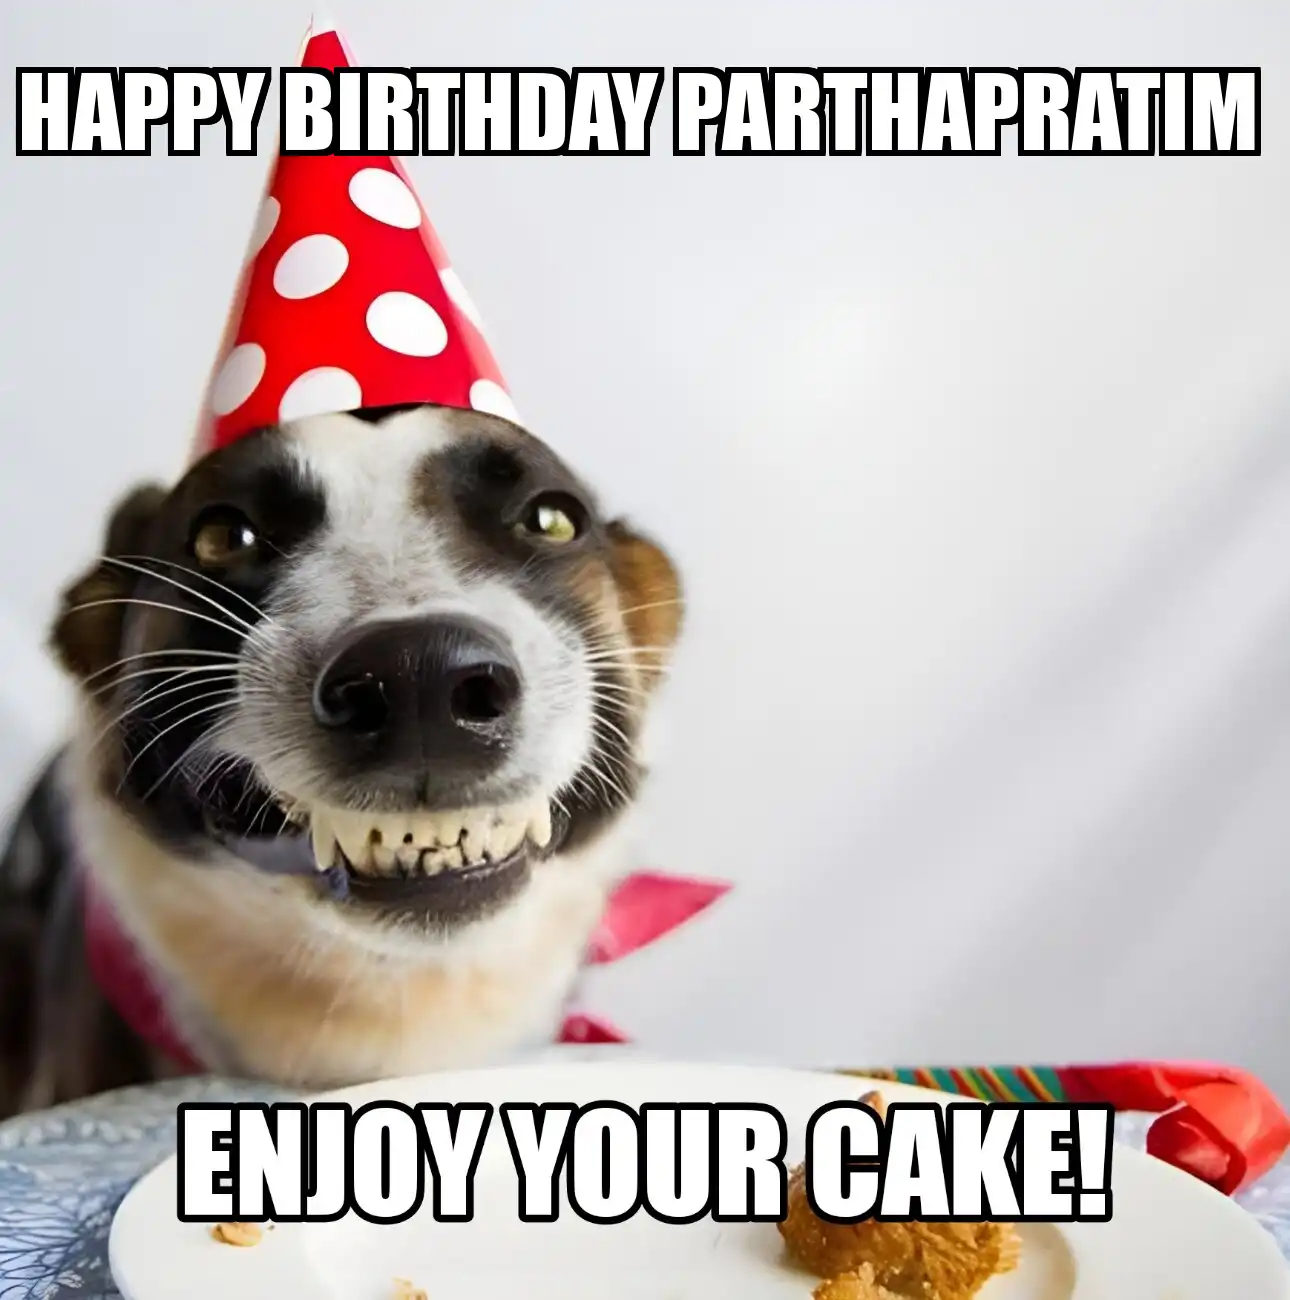 Happy Birthday Parthapratim Enjoy Your Cake Dog Meme